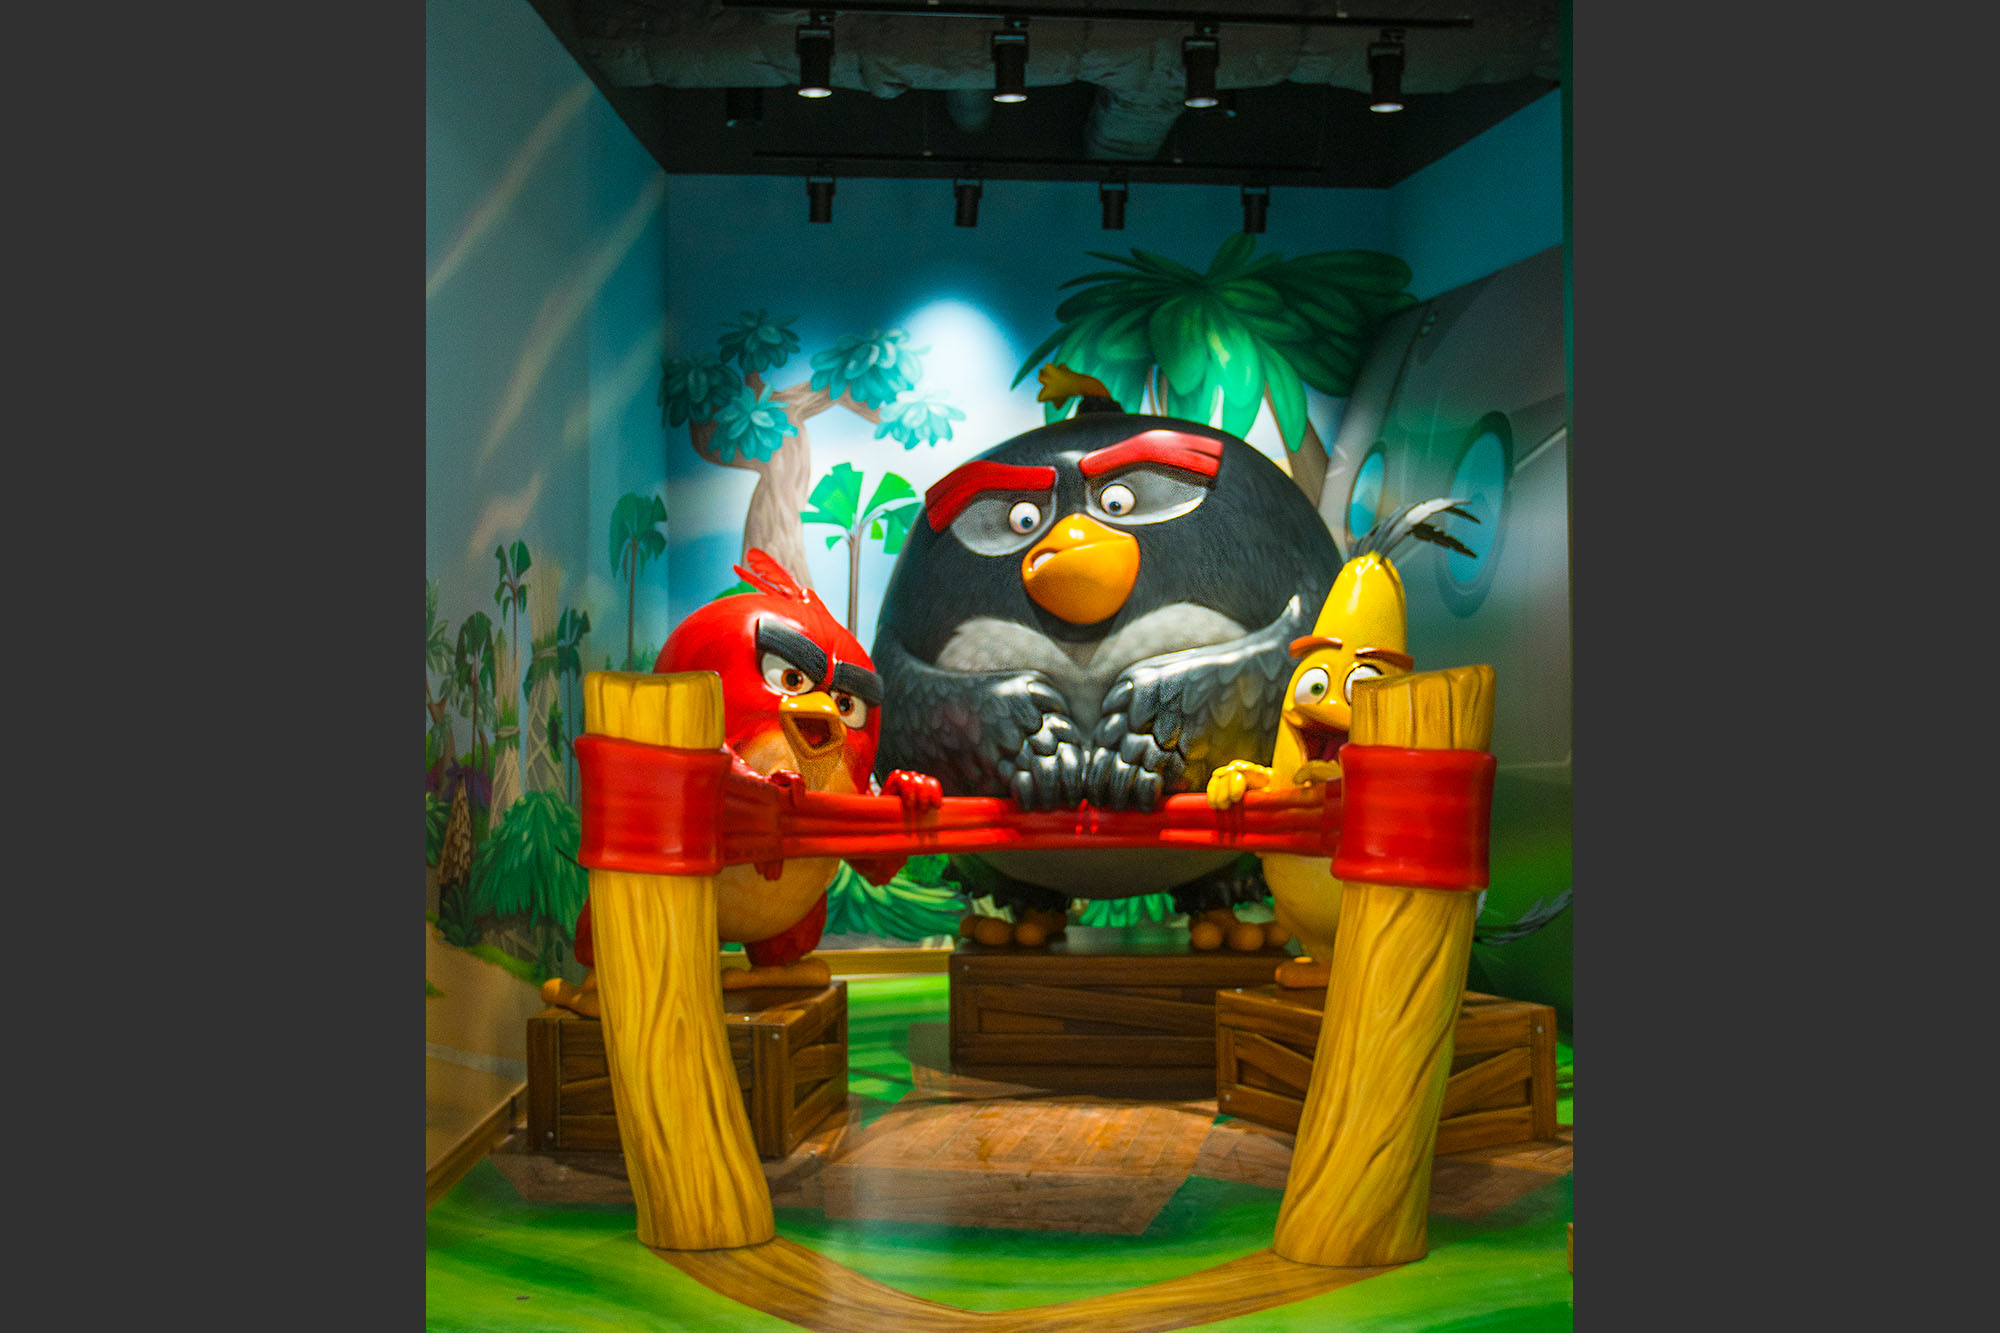 Angry Birds Mini Golf